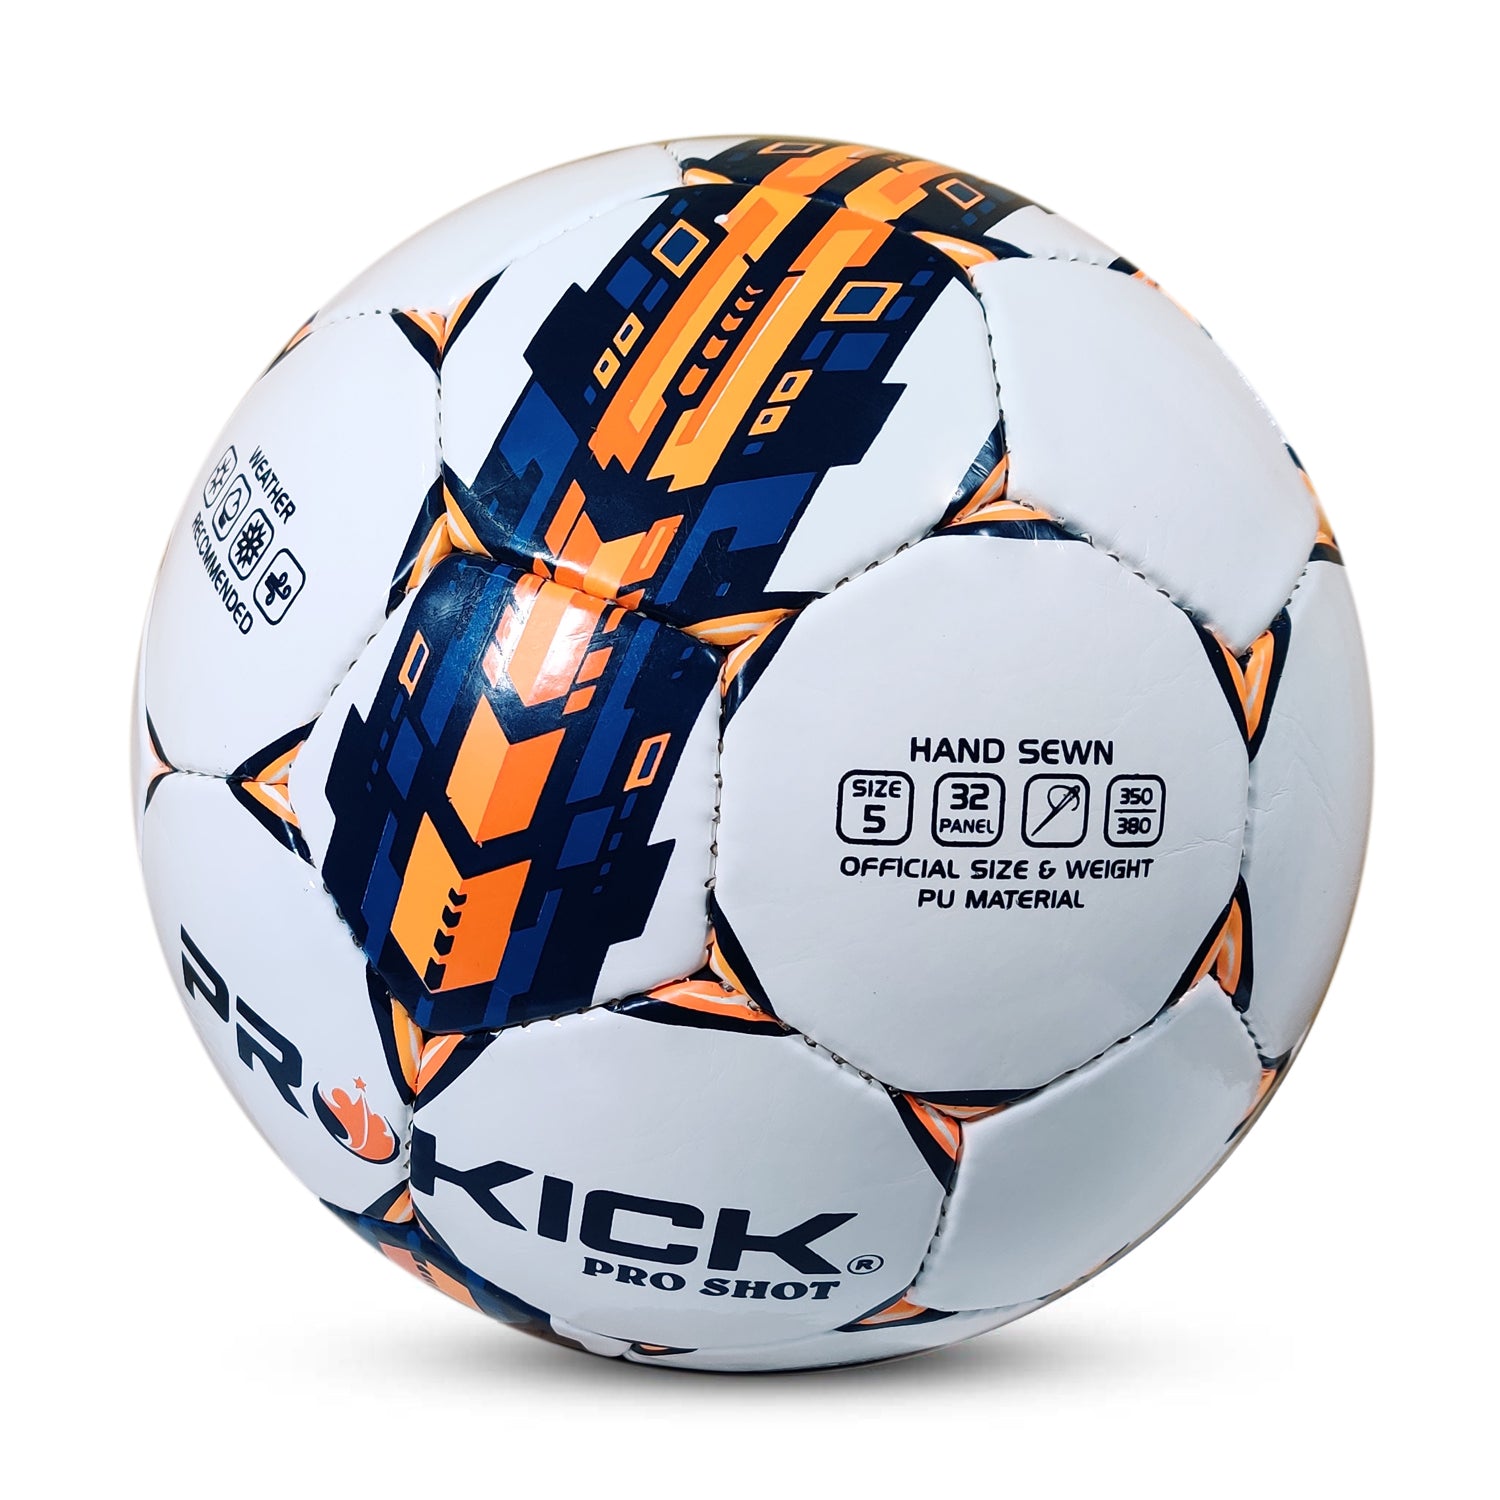 Prokick Pro Shot Hand Stitched 32 Panel PU Football, Size 5 (White/Navy/Orange) - Best Price online Prokicksports.com